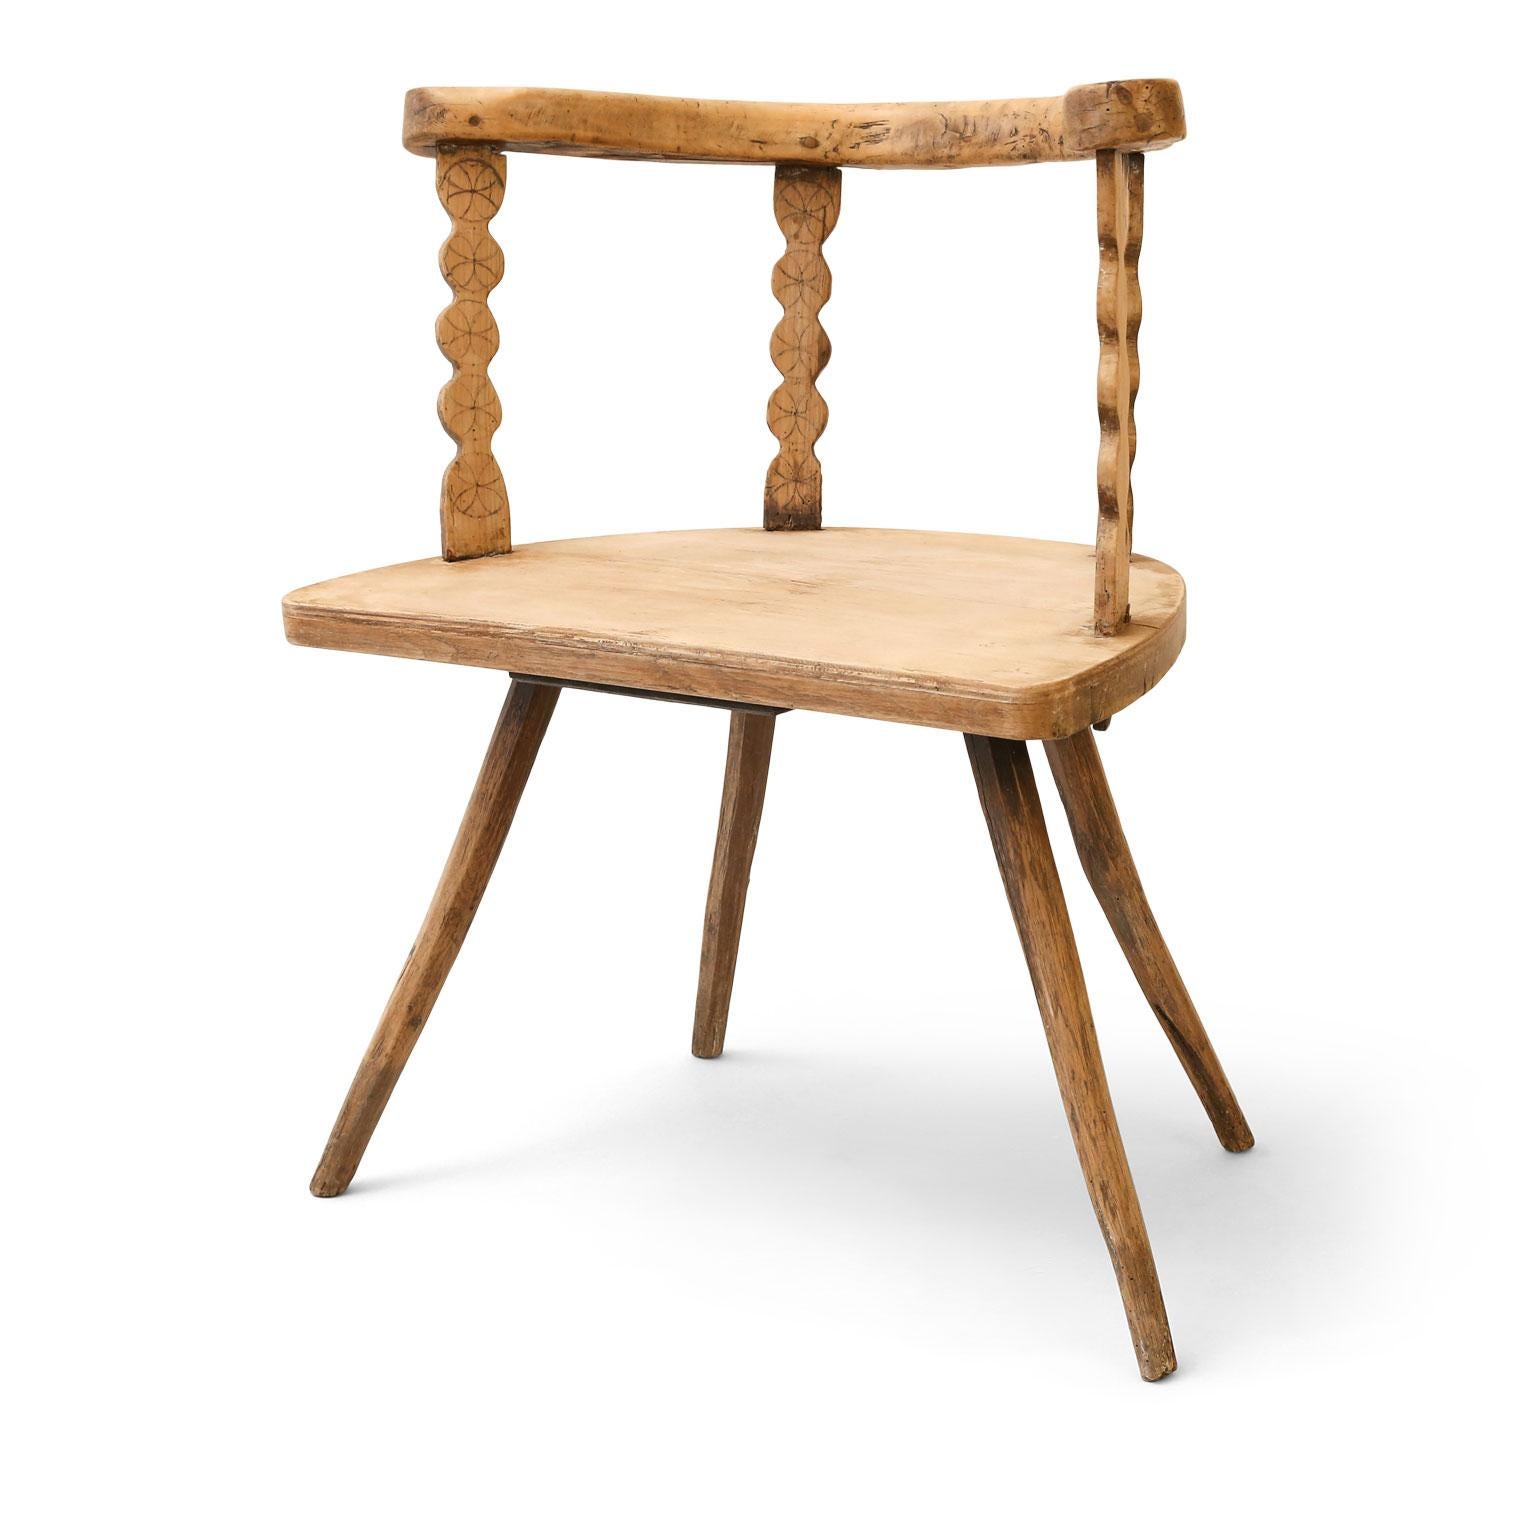 Wood Swedish Vernacular Chair